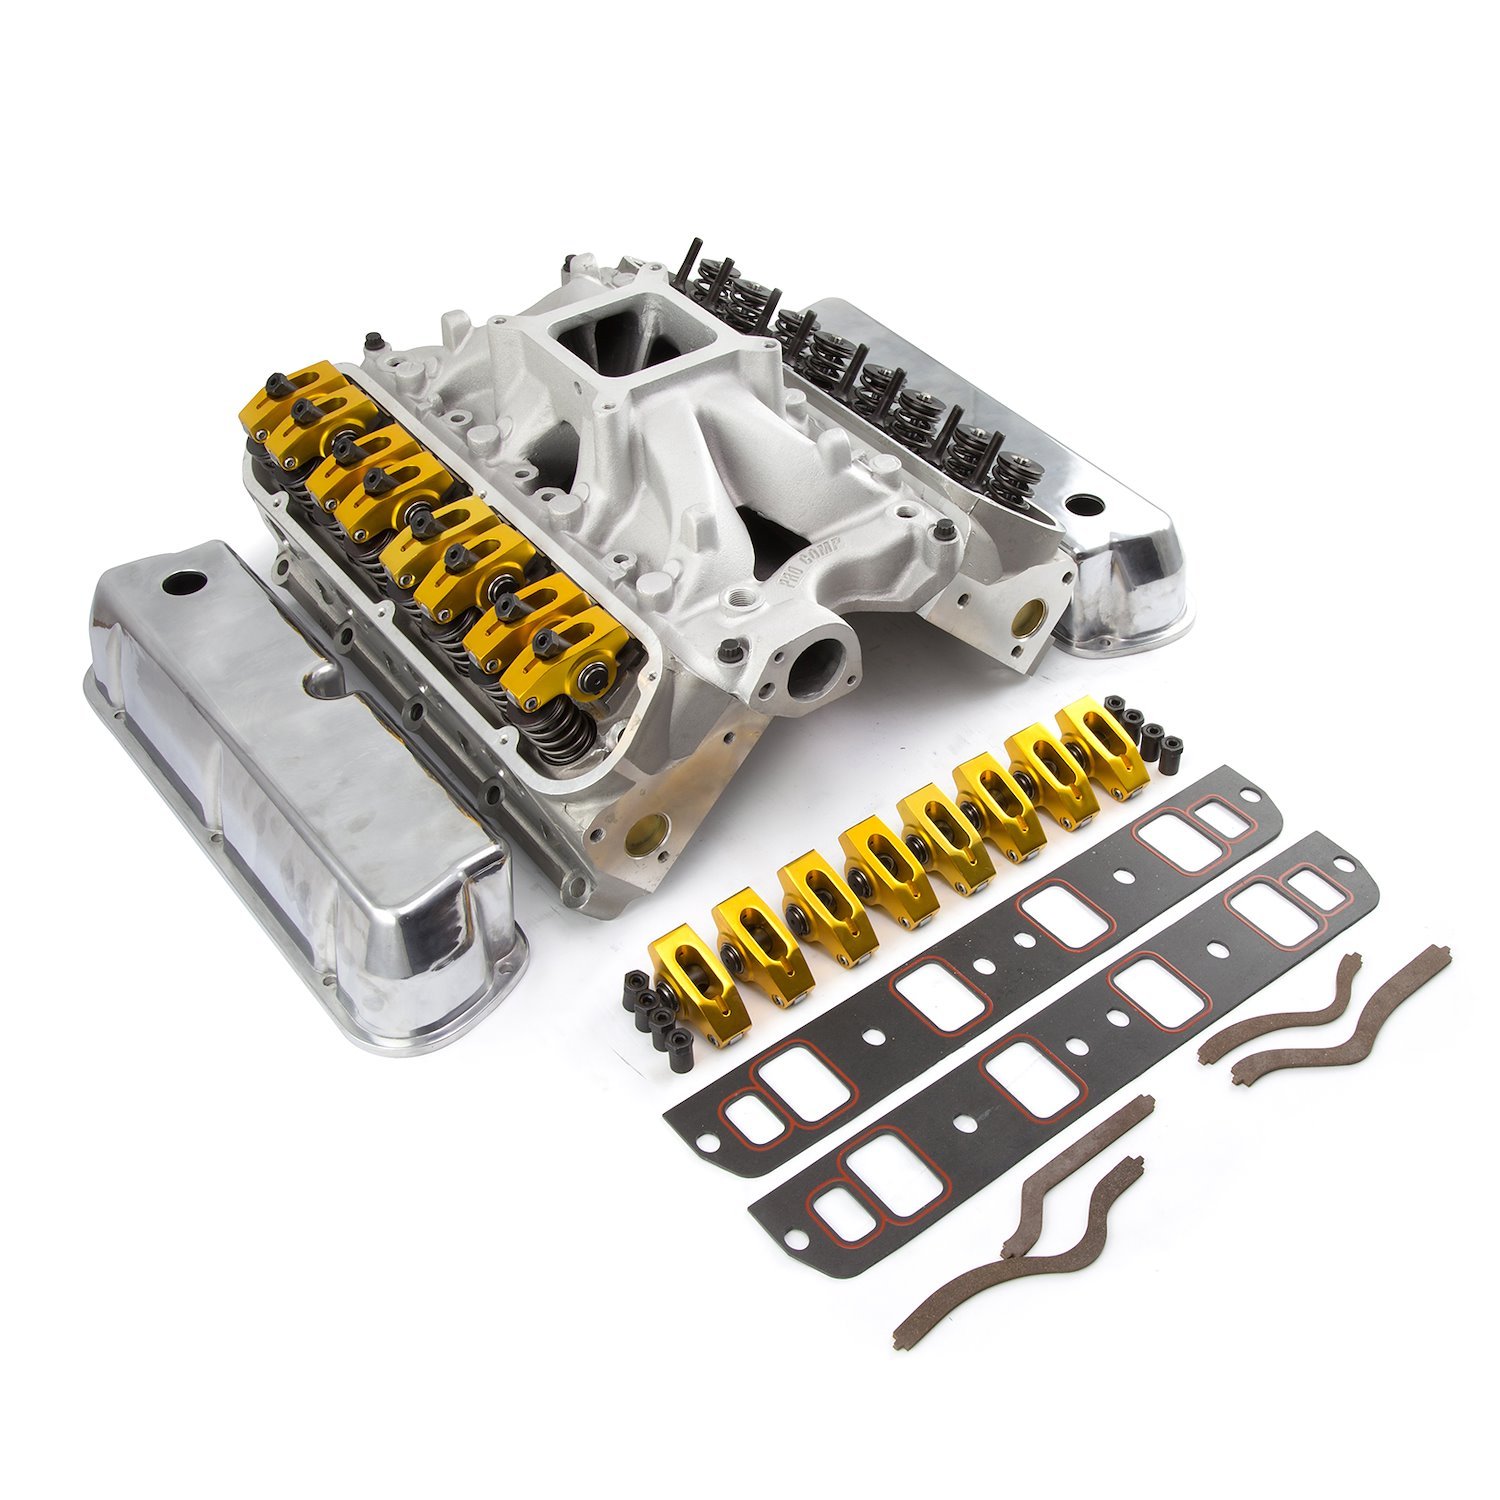 Ford SB 289 302 Hydraulic Roller CNC Top End Engine Kit